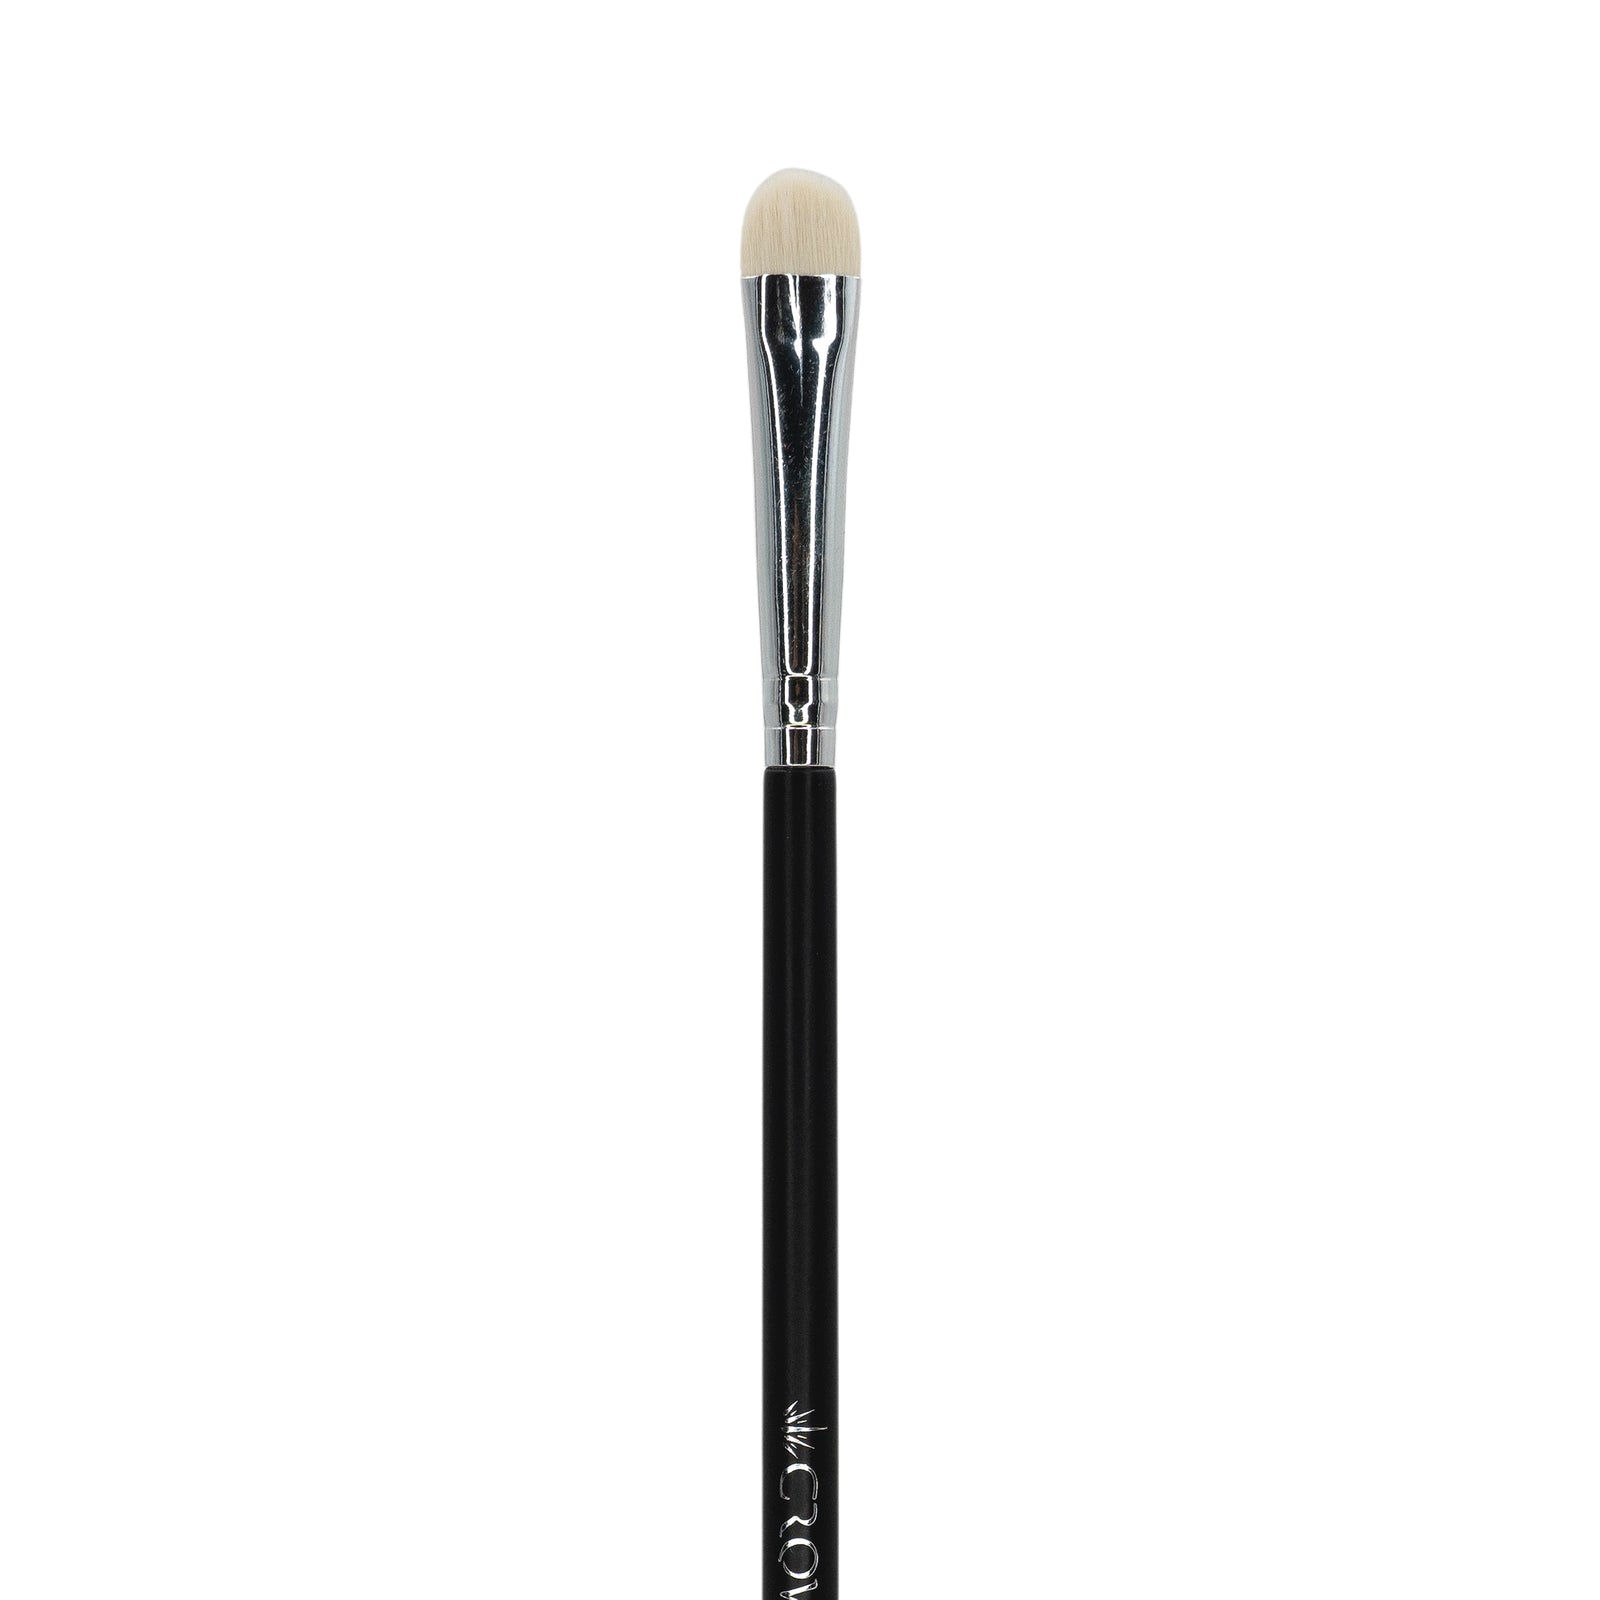 Crownbrush C537 Oval Eyeshadow Brush